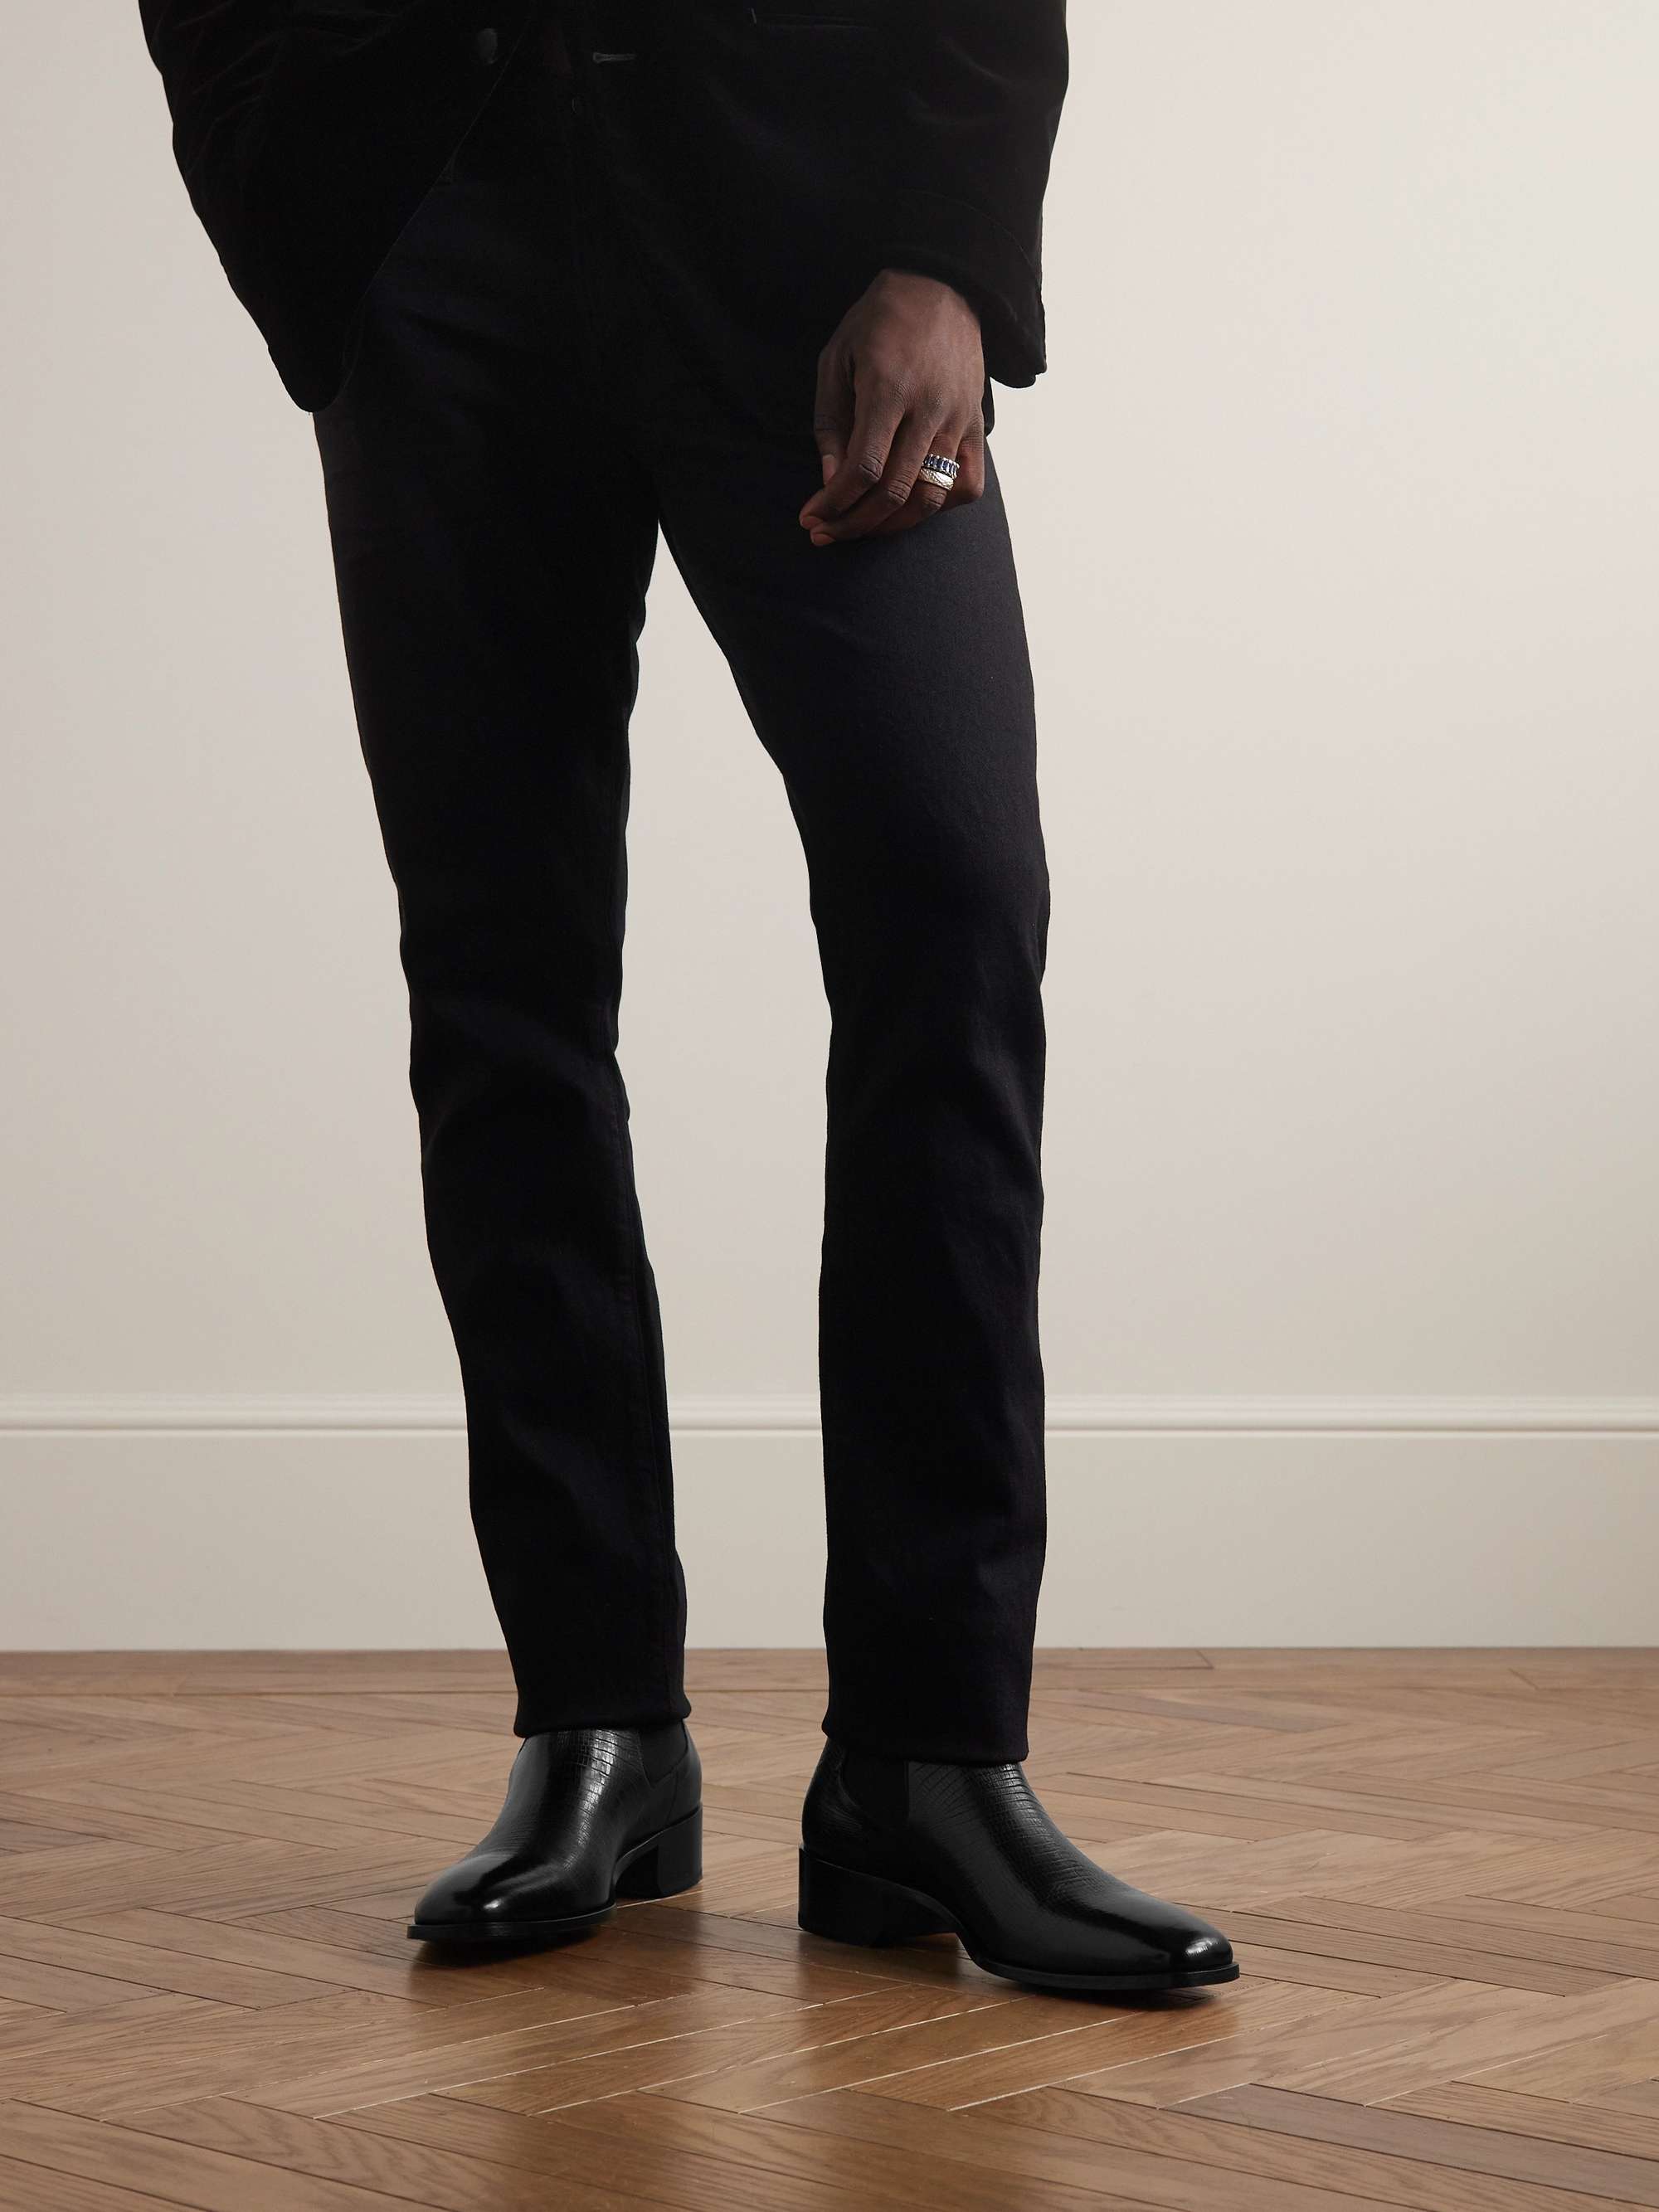 TOM FORD Alec Croc-Effect Leather Chelsea Boots for Men | MR PORTER